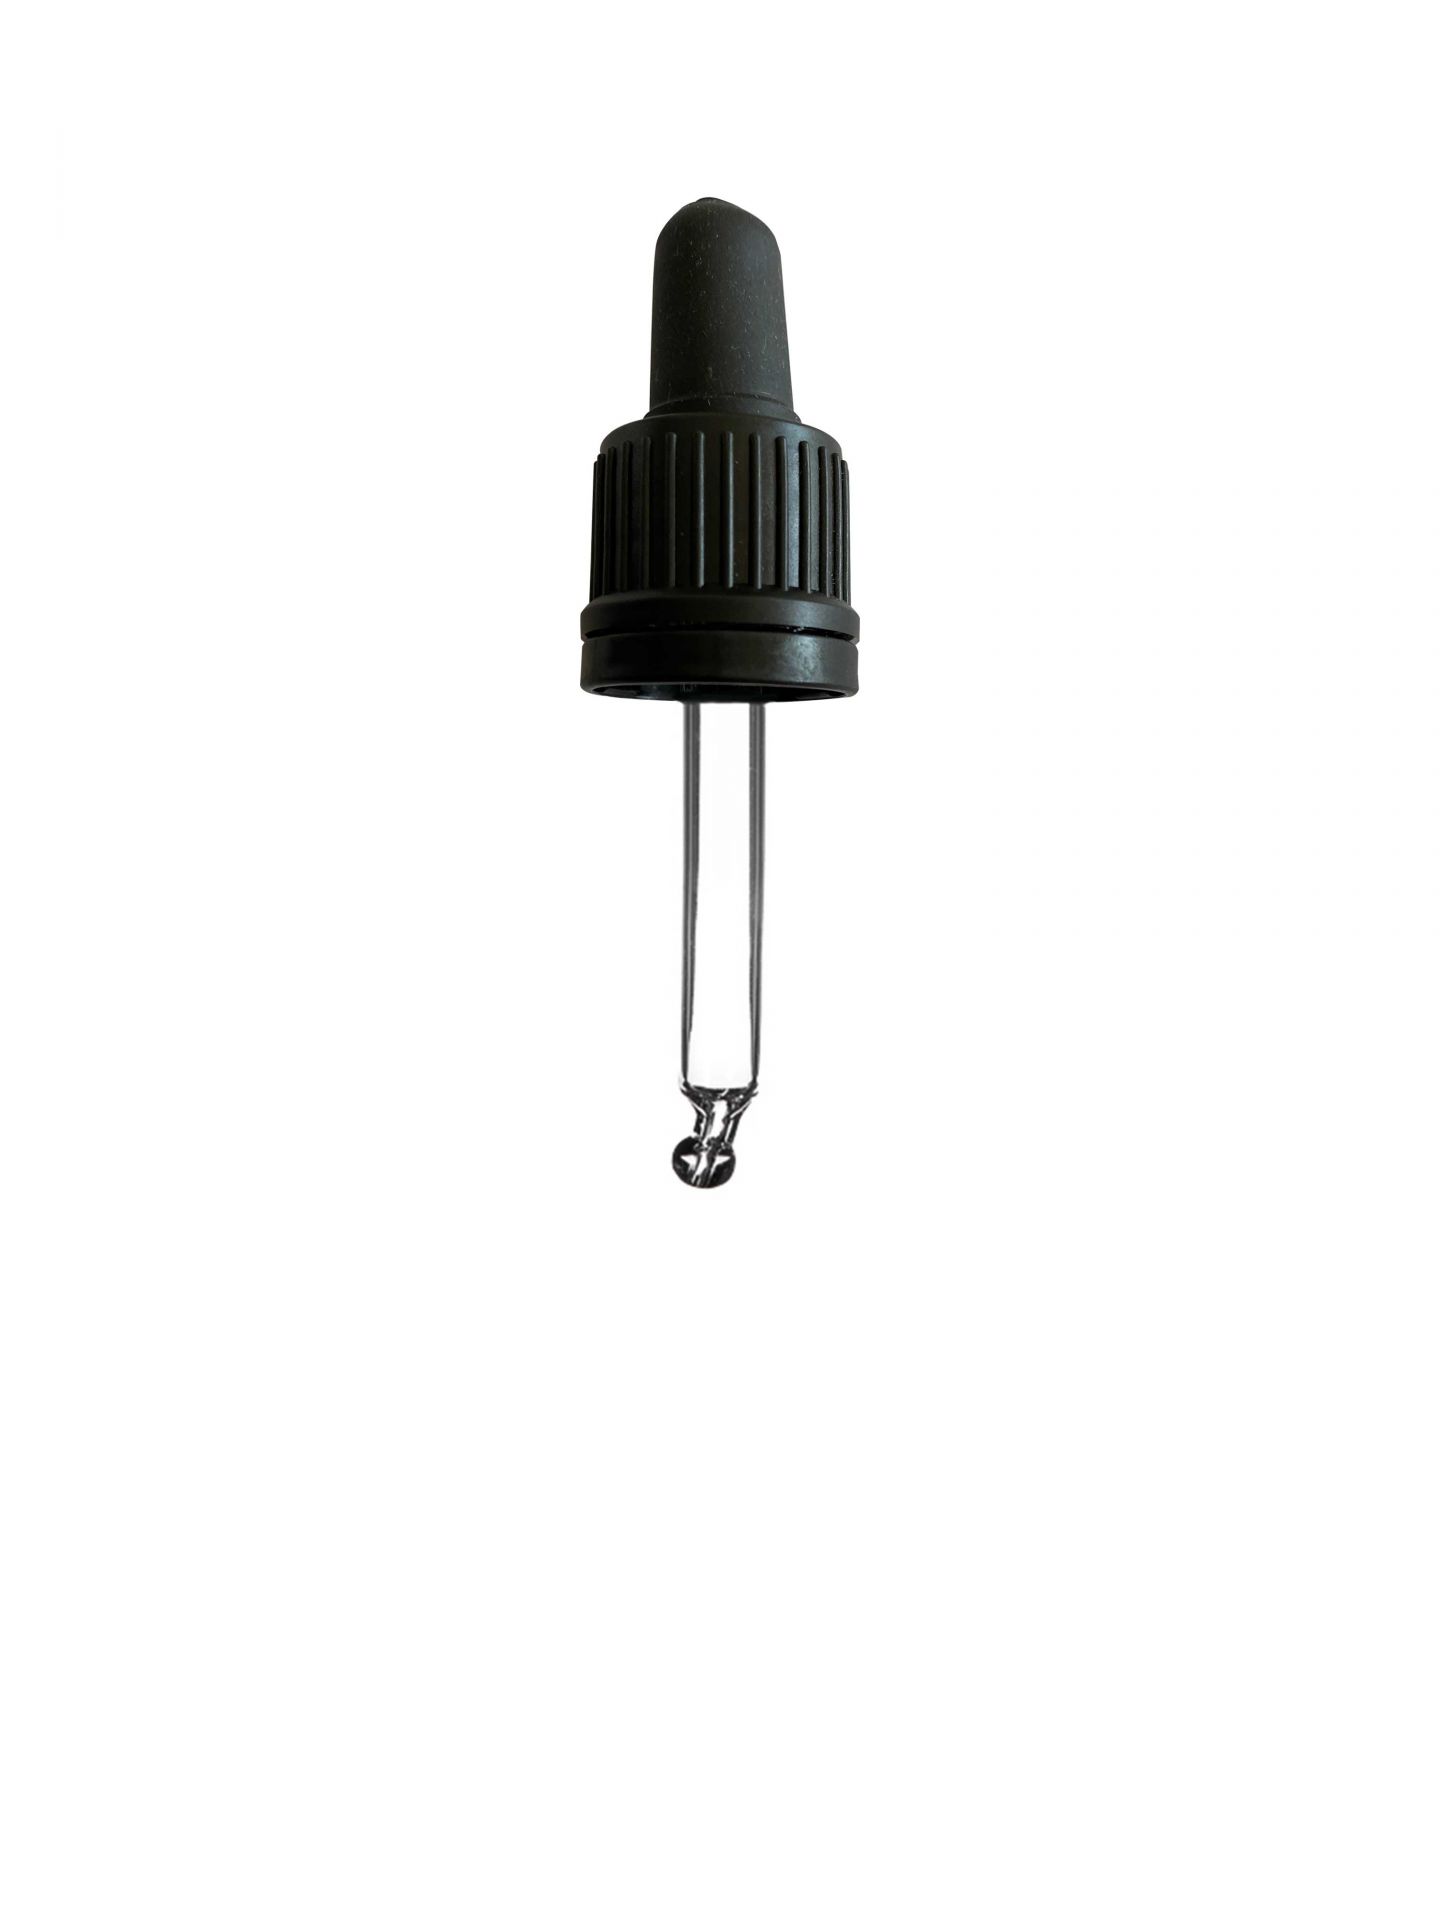 Pipette tamper evident DIN18, II, black, ribbed, bulb TPE, dose 0.7ml, bent ball tip (Orion 10-63)